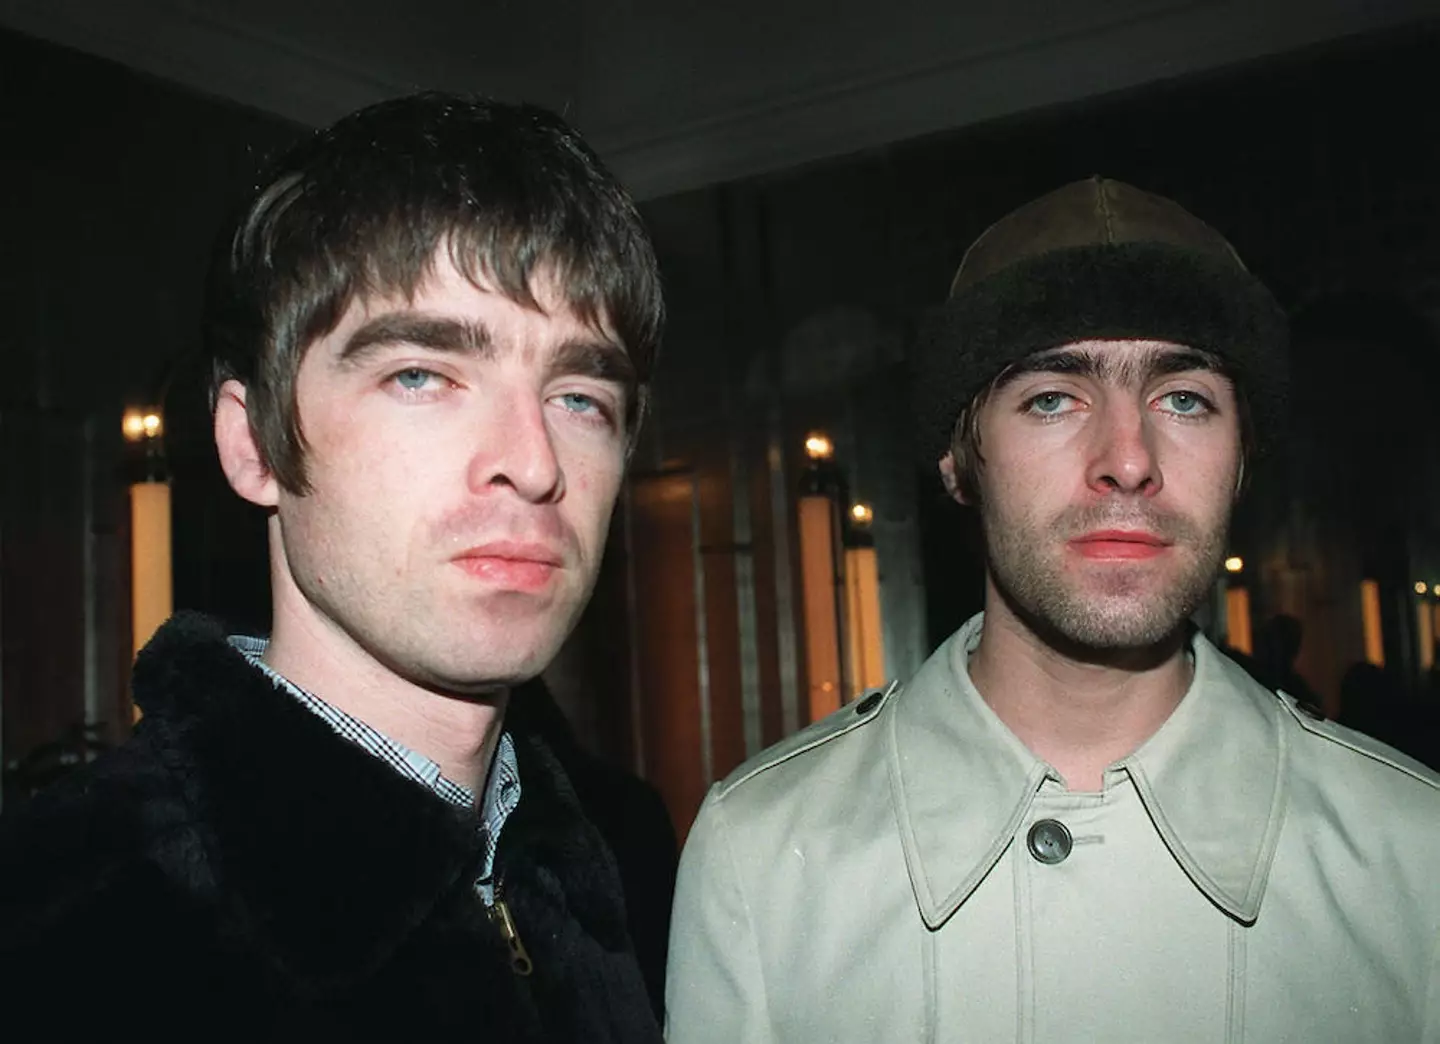 Fans would love an Oasis reunion.